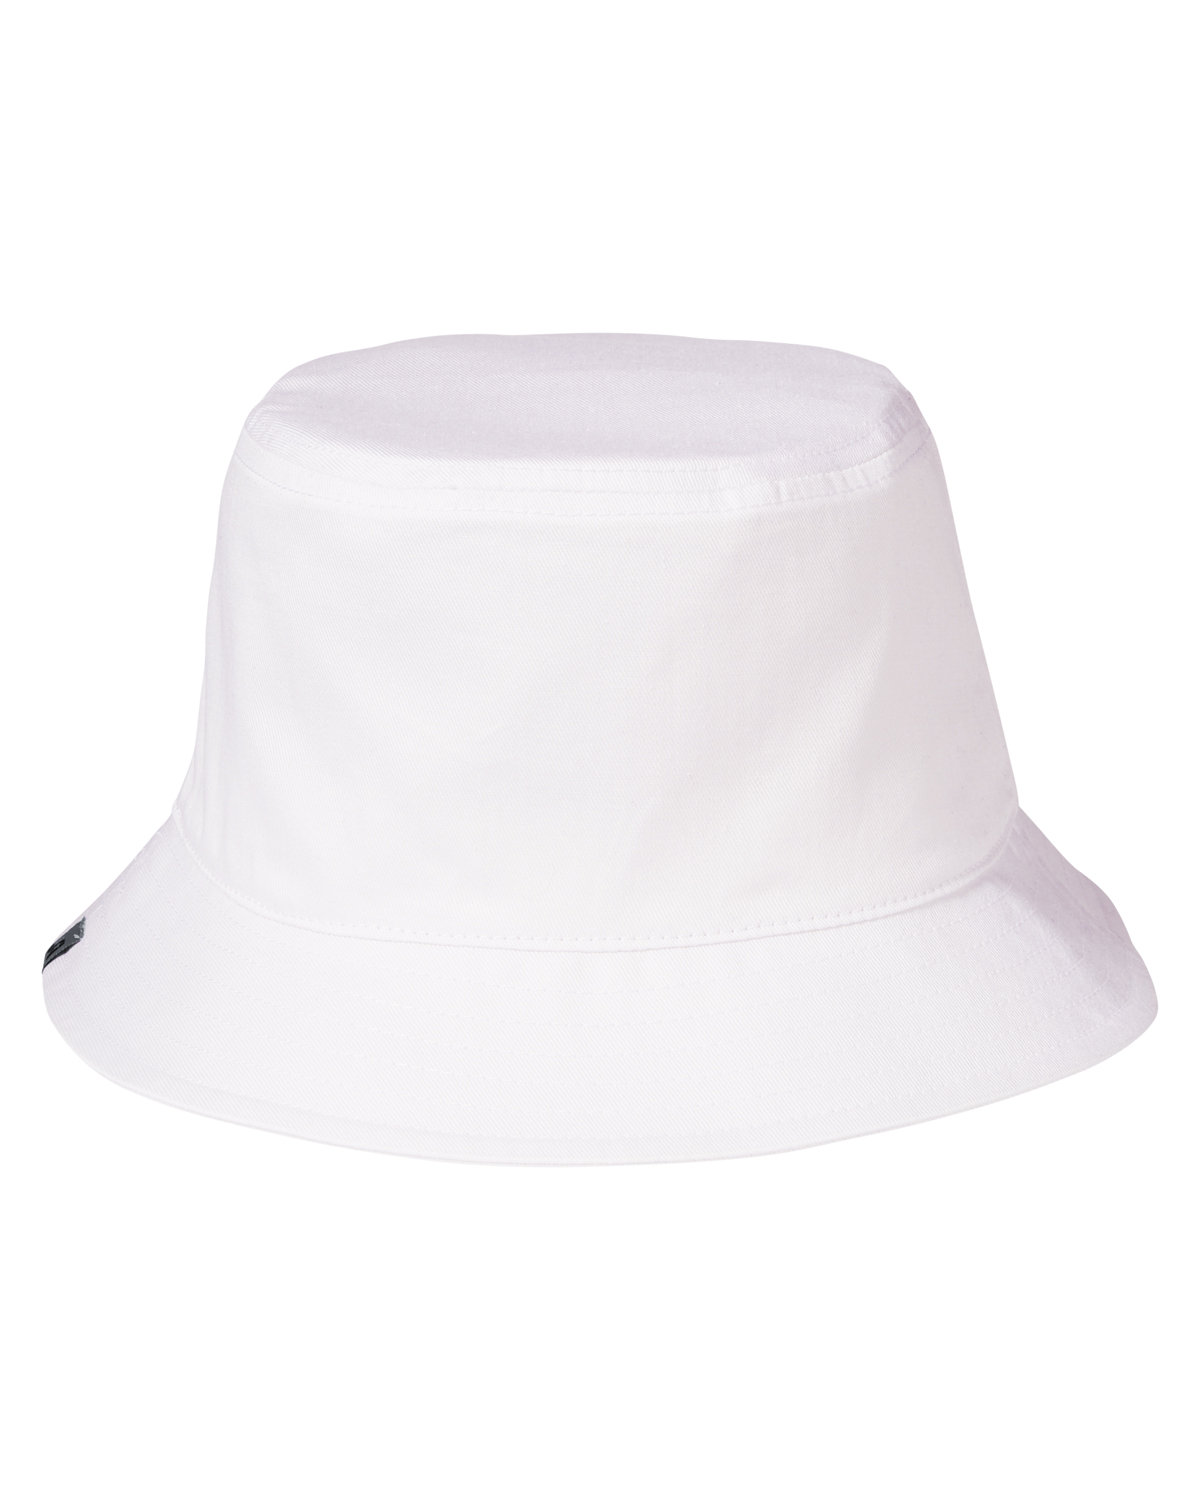 J. America 5540 - Gilligan Boonie Hat